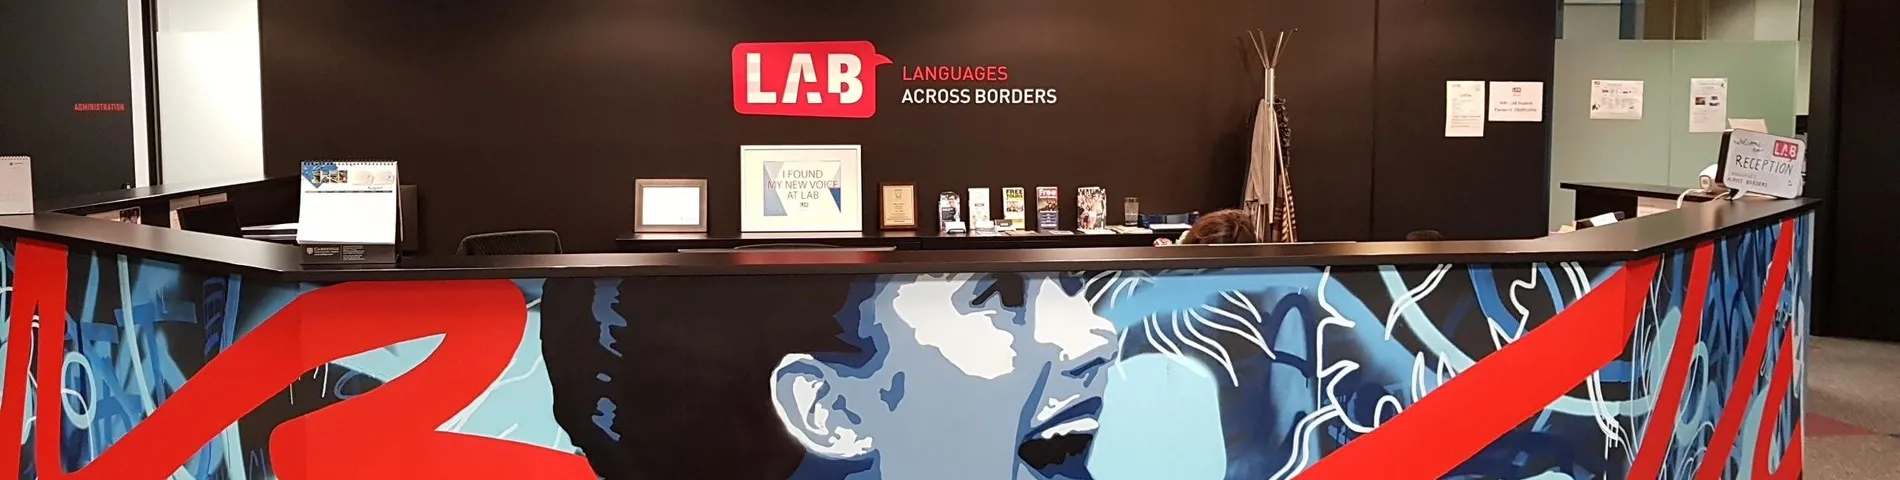 LAB - Languages Across Borders billede 1